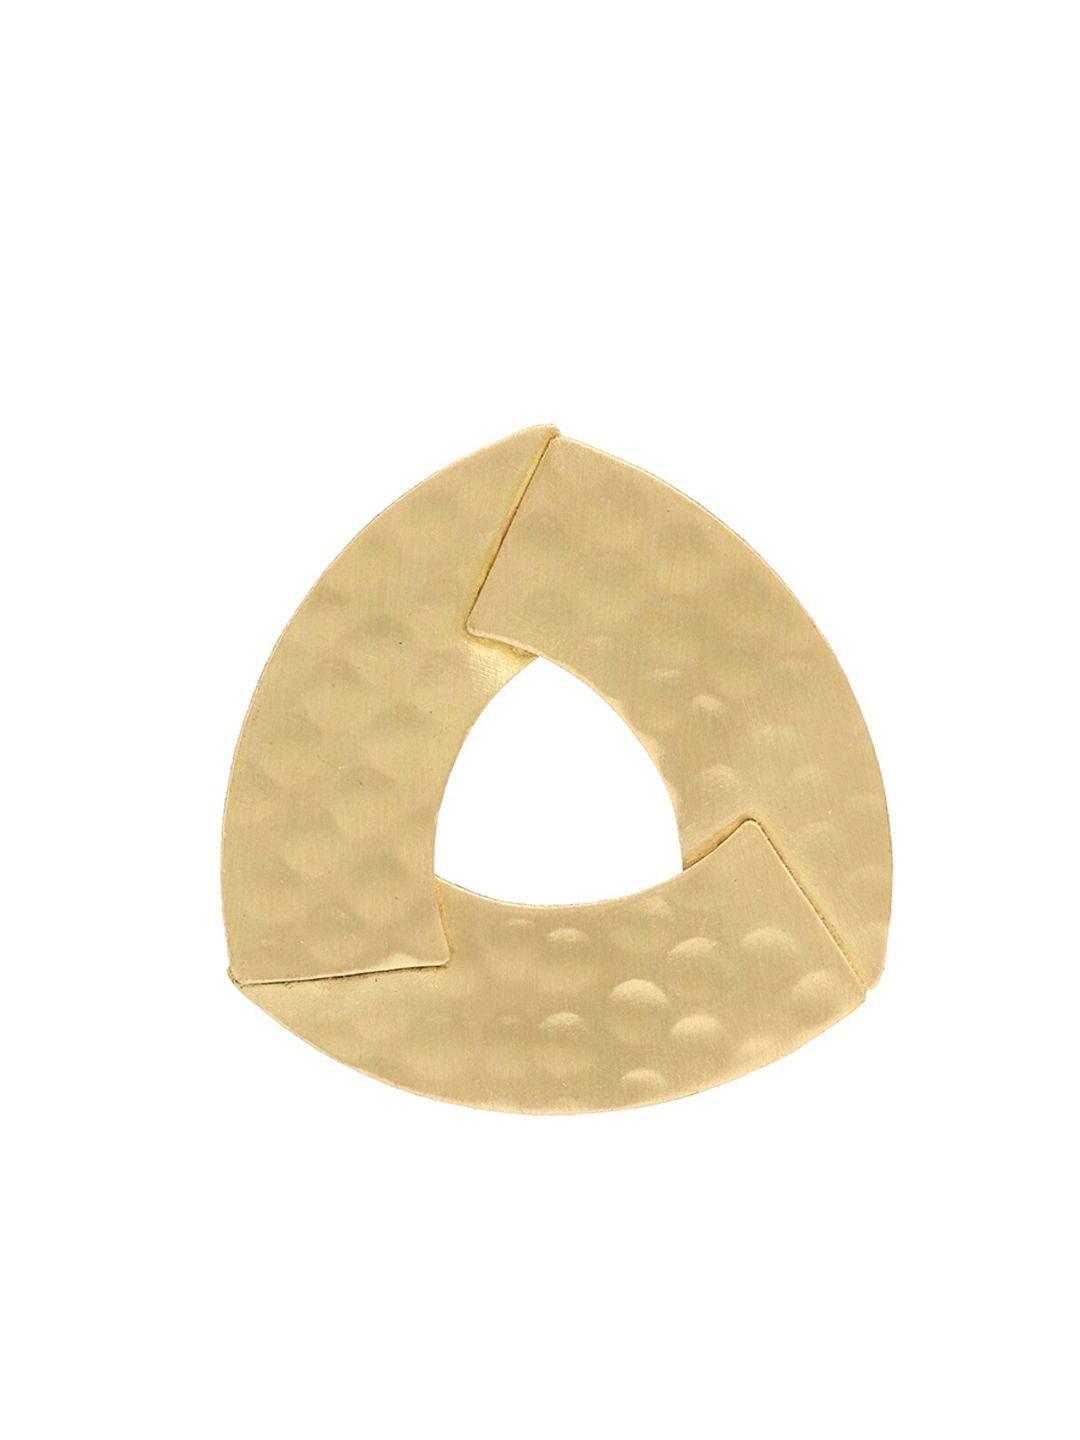 forever 21 gold-toned geometric studs earrings